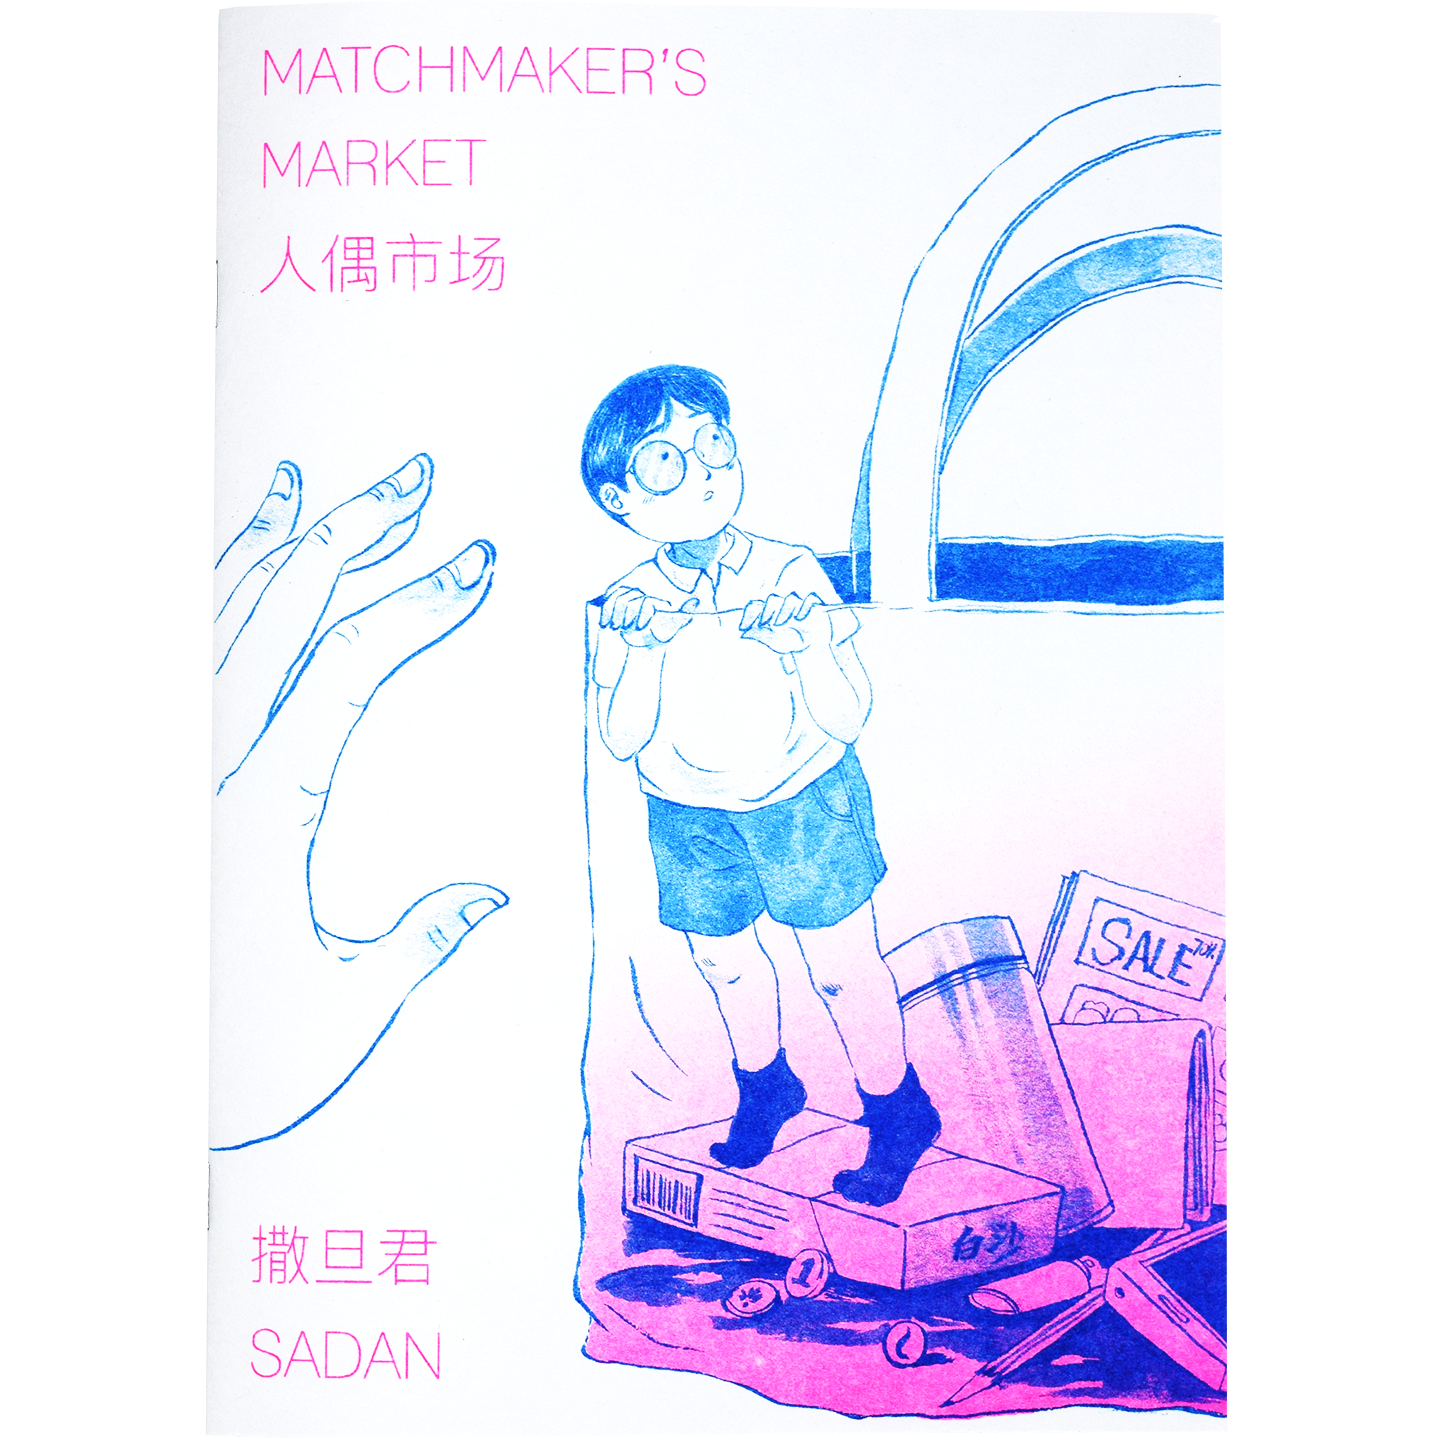 Matchmaker's Market